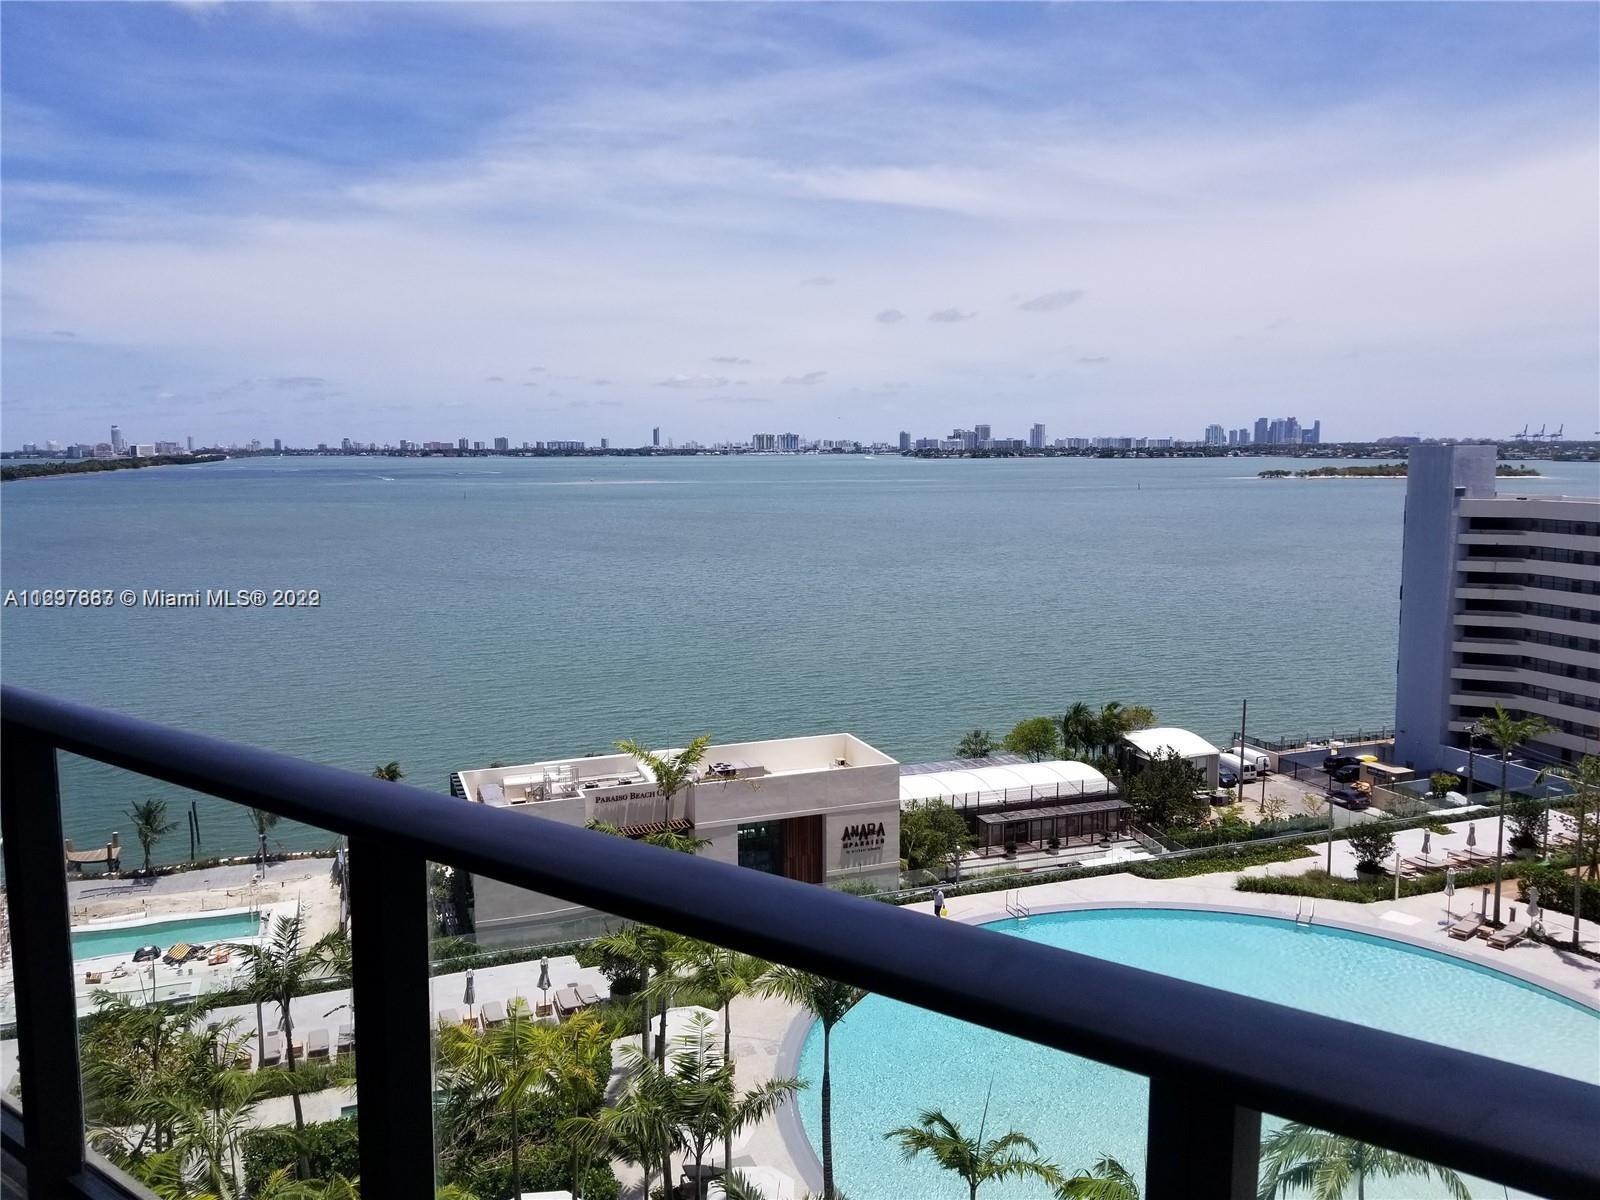 Photo 1 of Paraiso Bay Apt 1101 in Miami - MLS A11297683